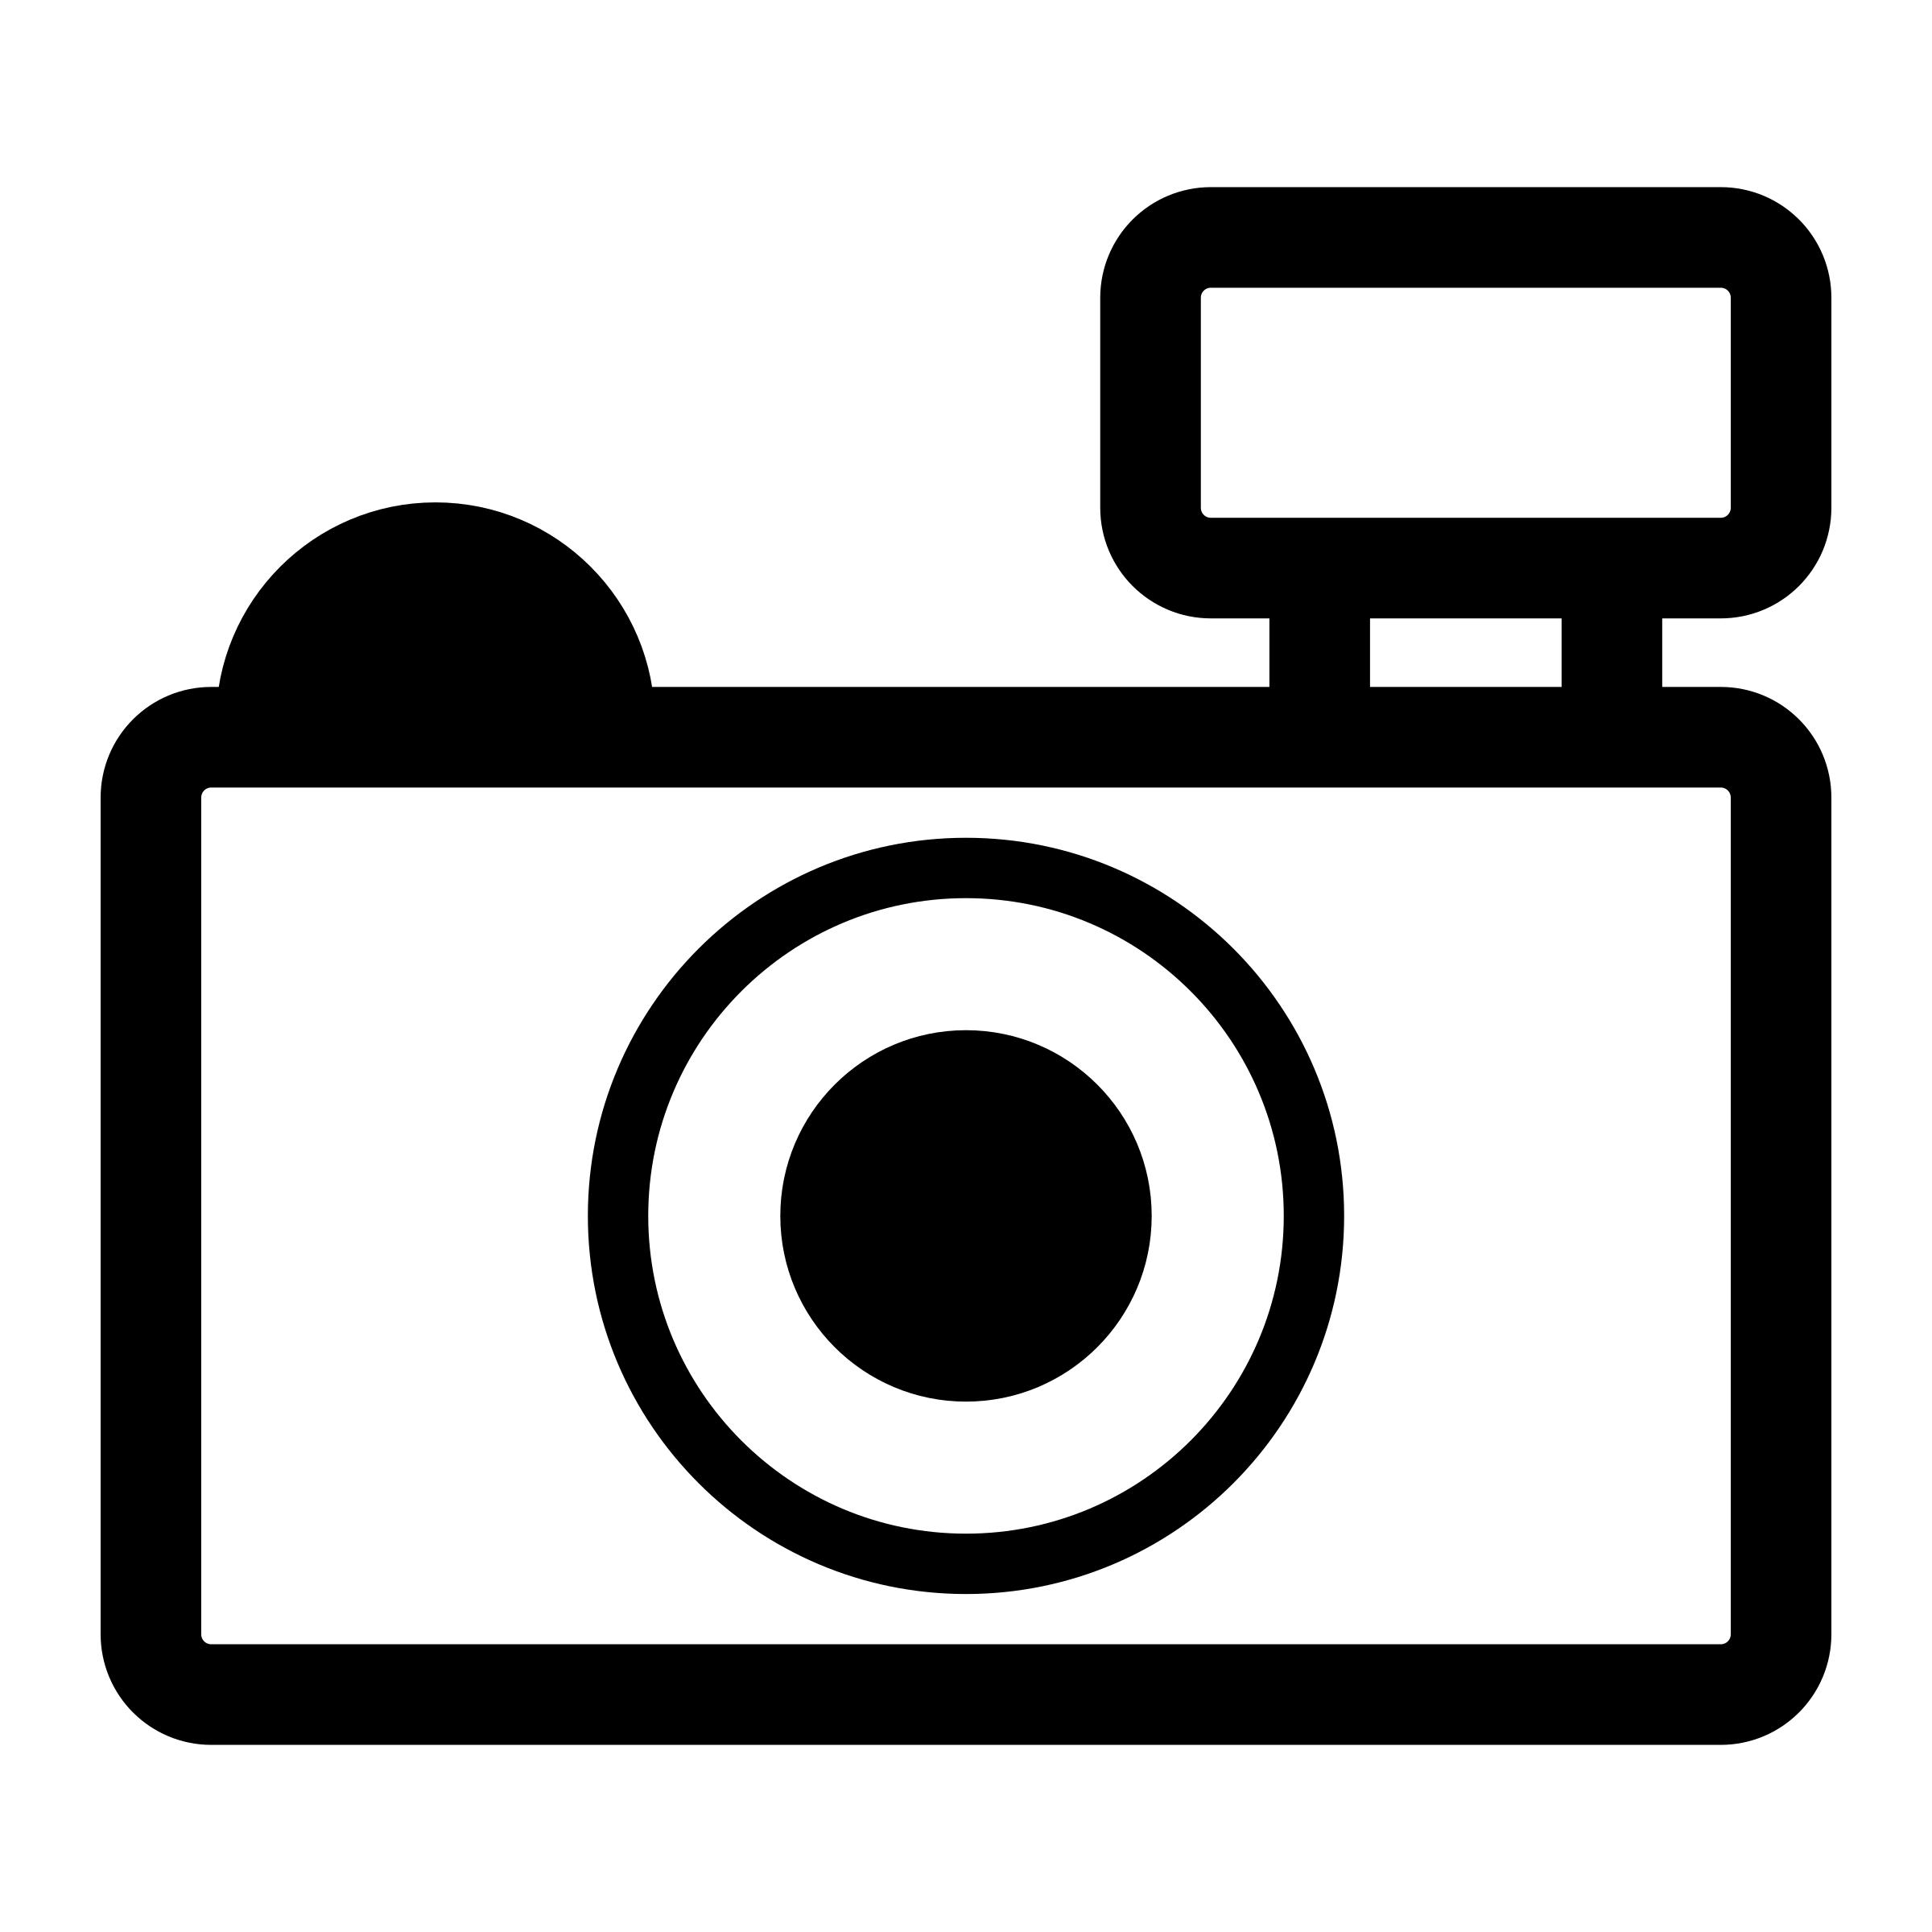 Camera graphics clipart - ClipartFox